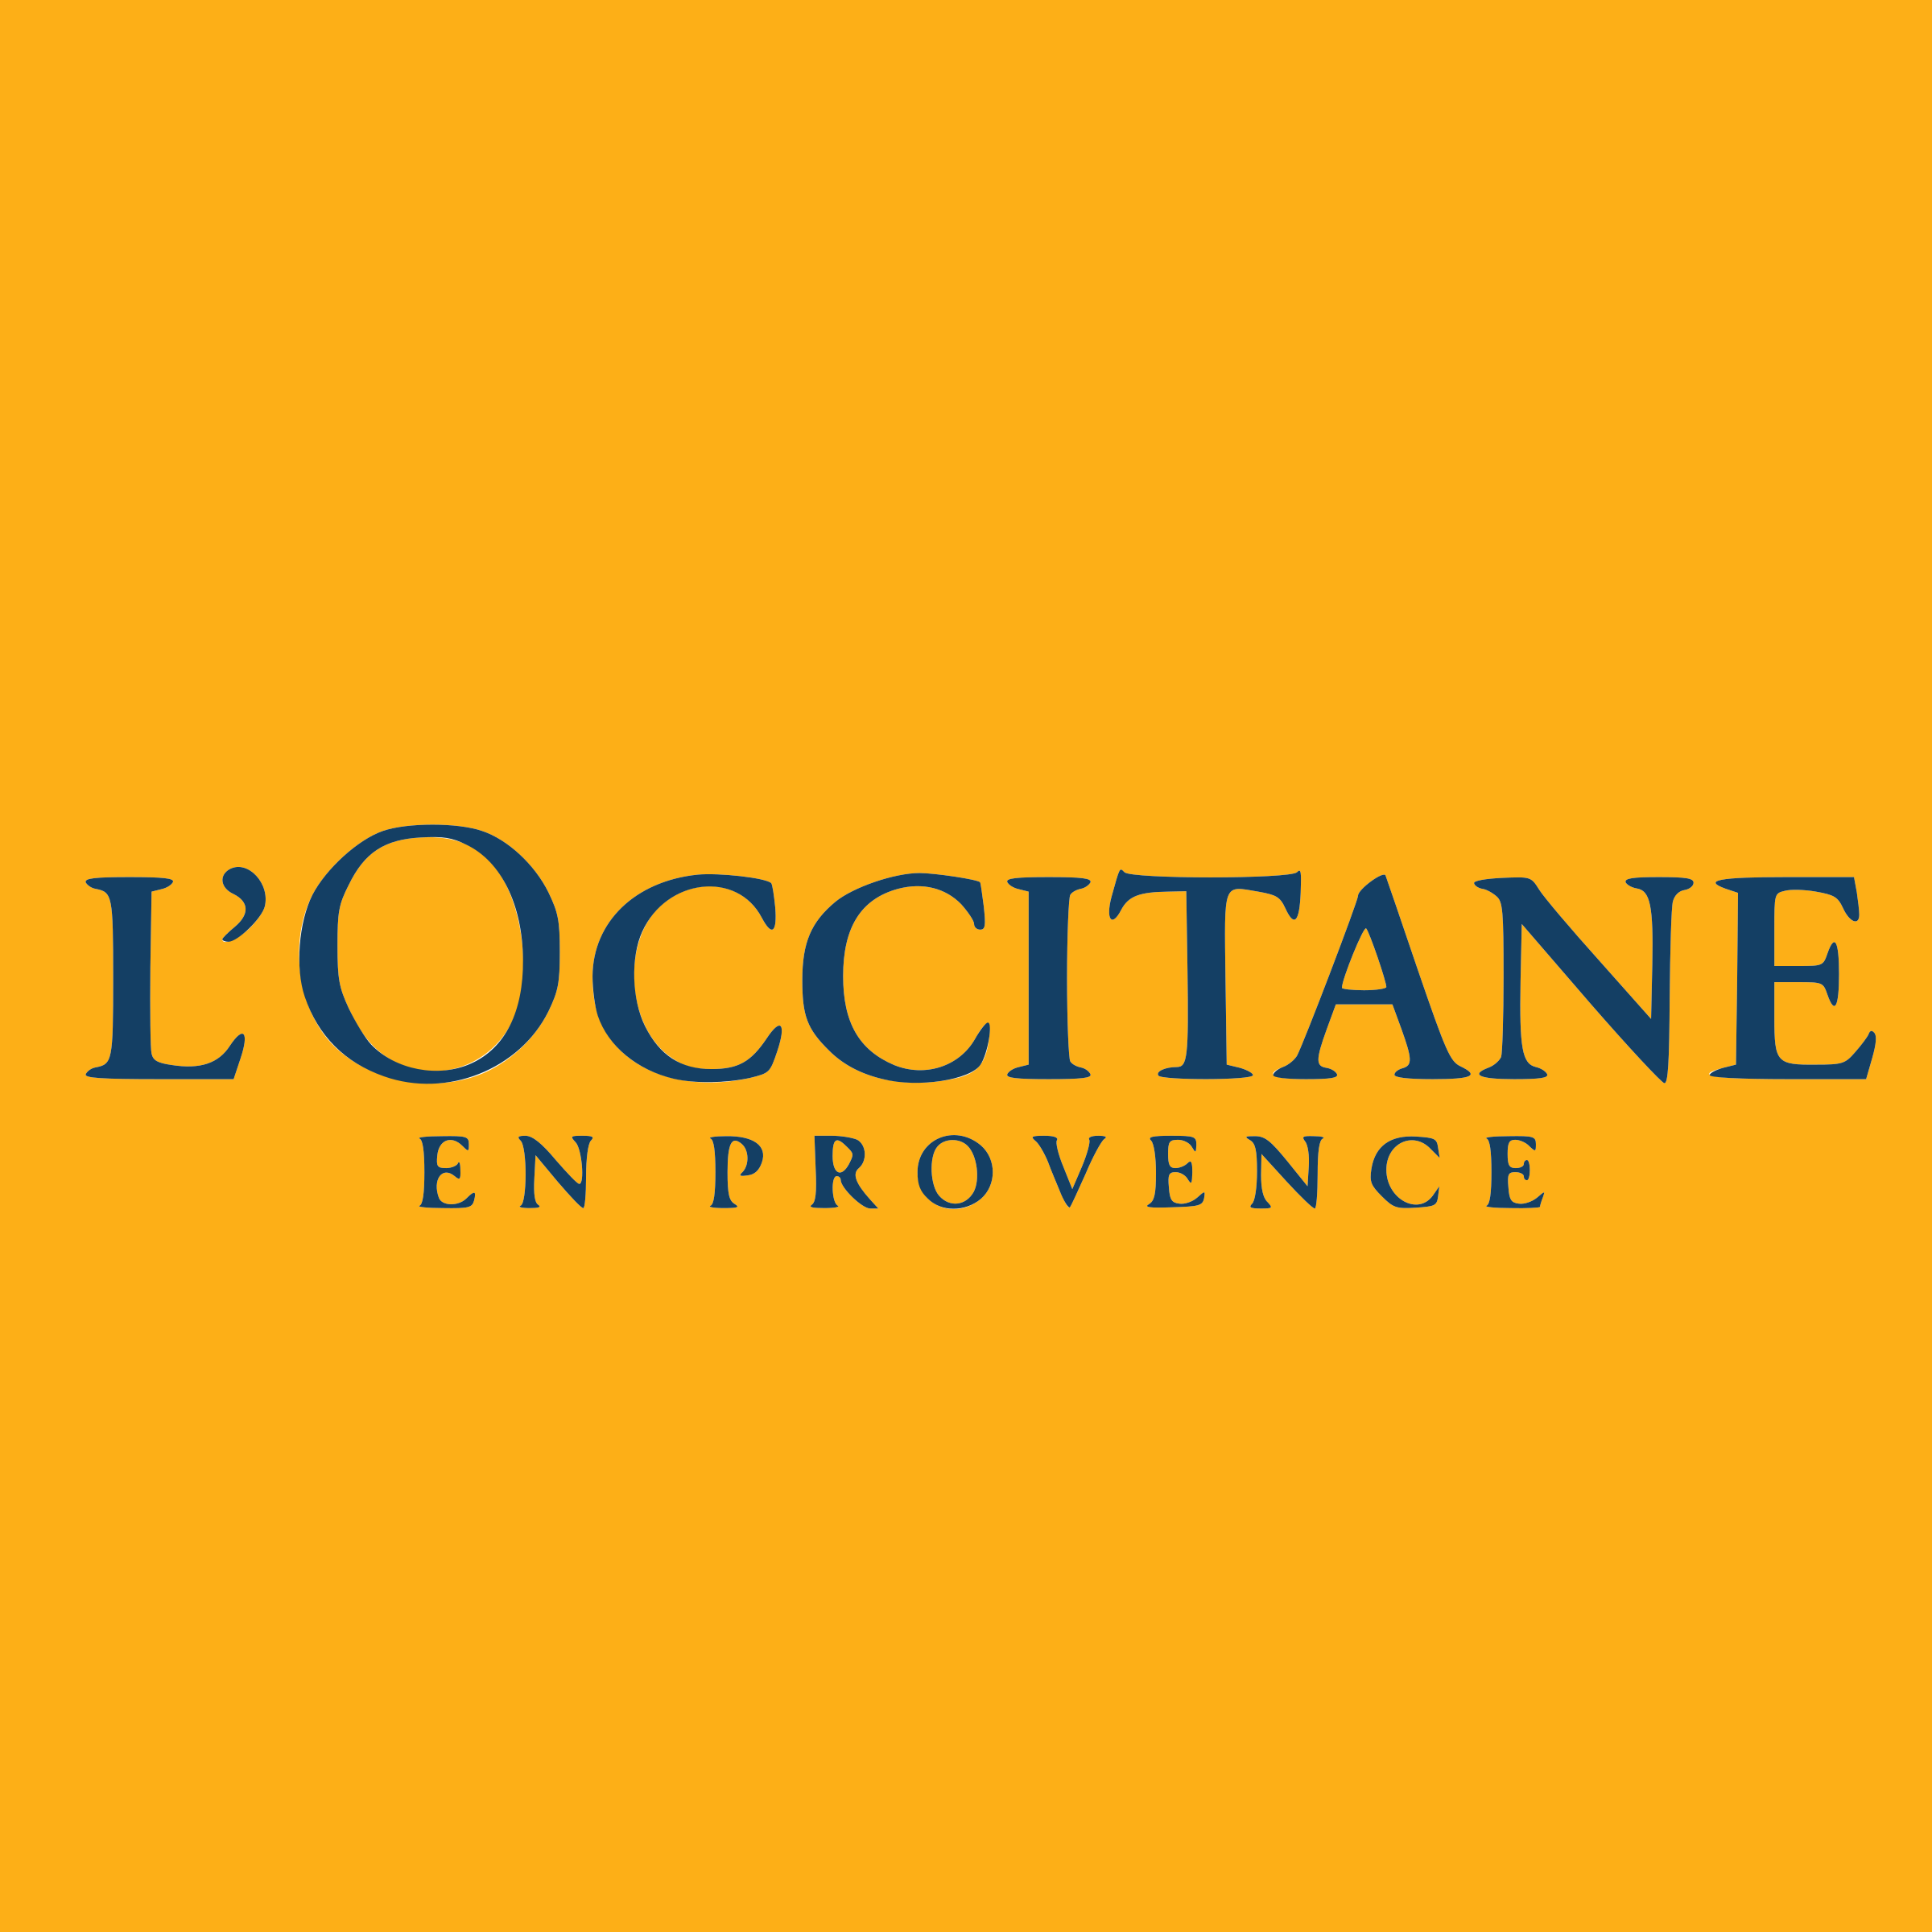 loccitane-1-logo-png-transparent.png